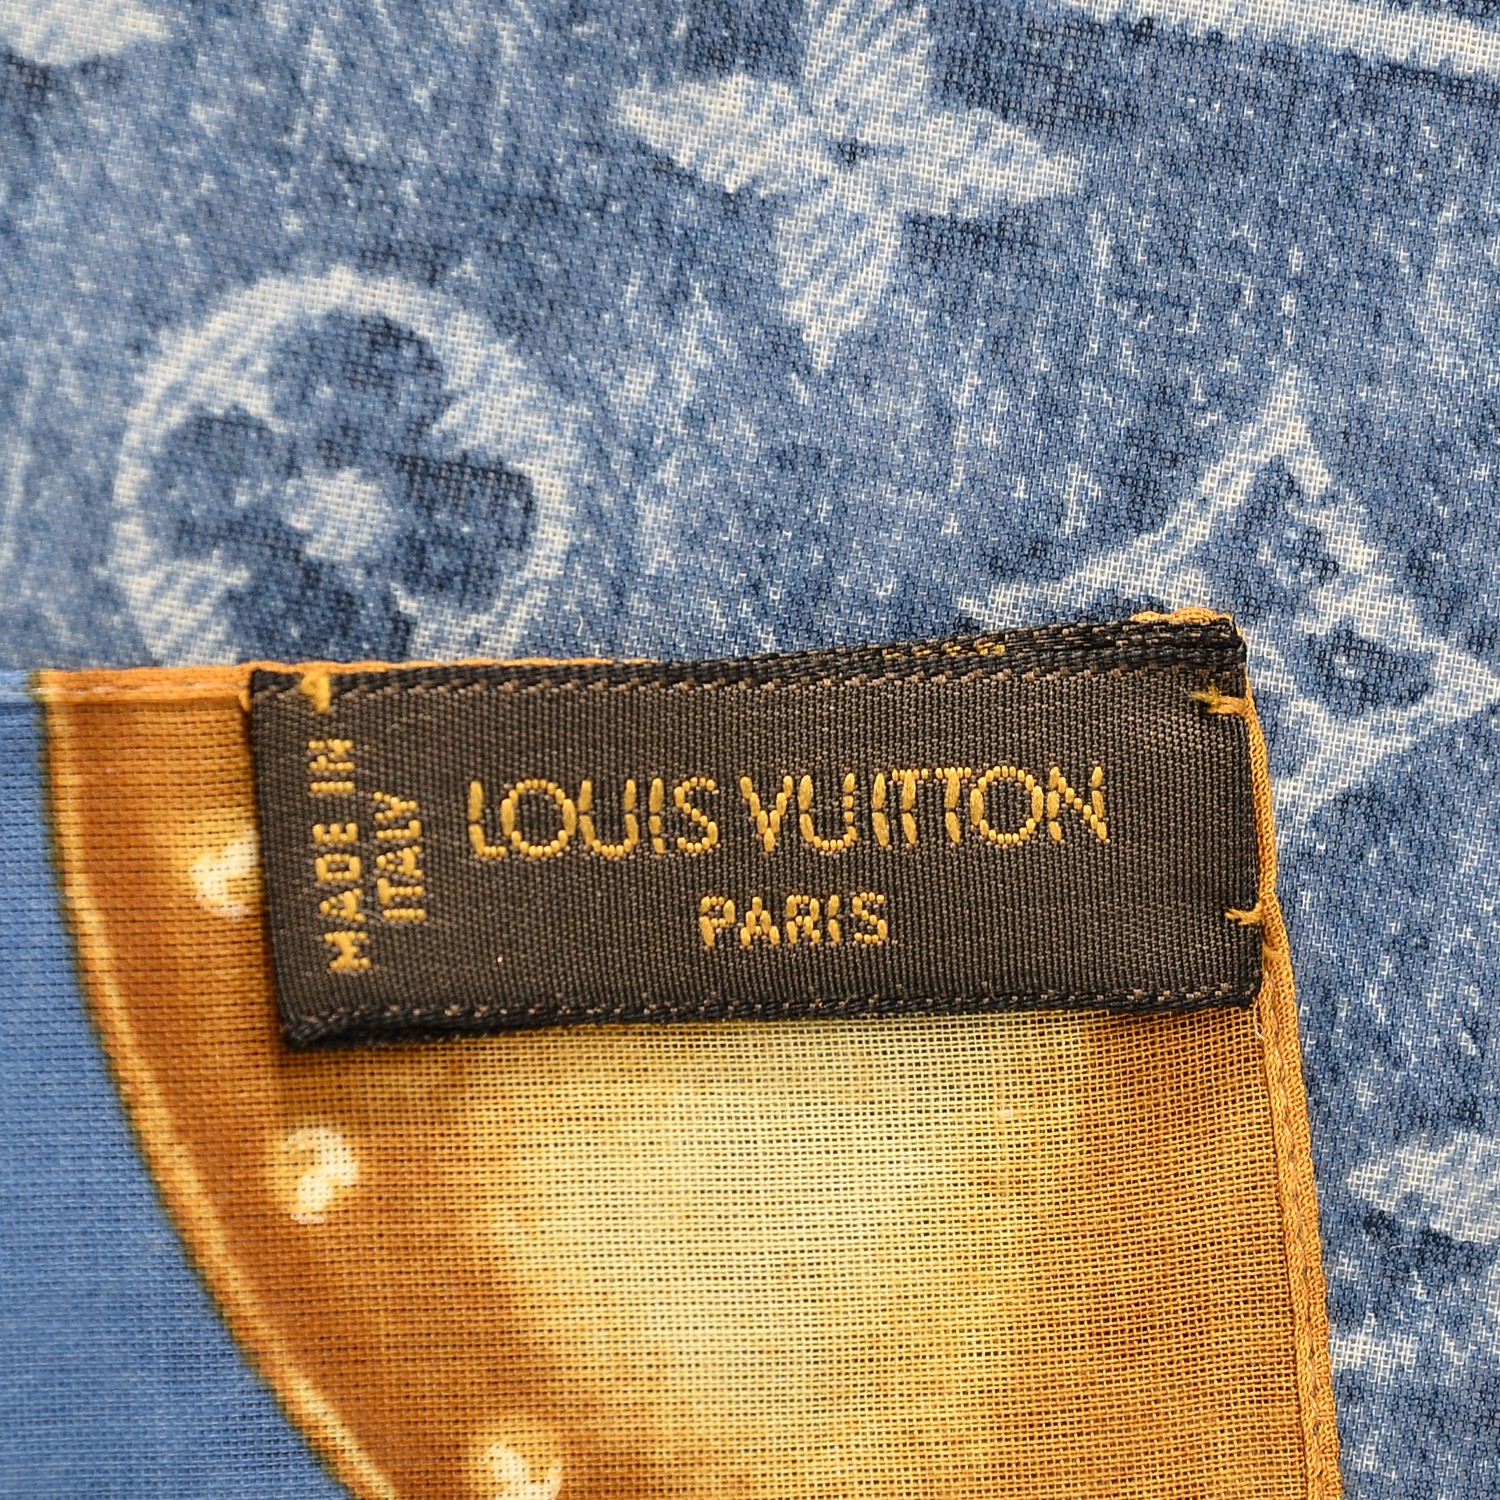 LOUIS VUITTON Silk Monogram Denim Bandana Scarf Blue 184984